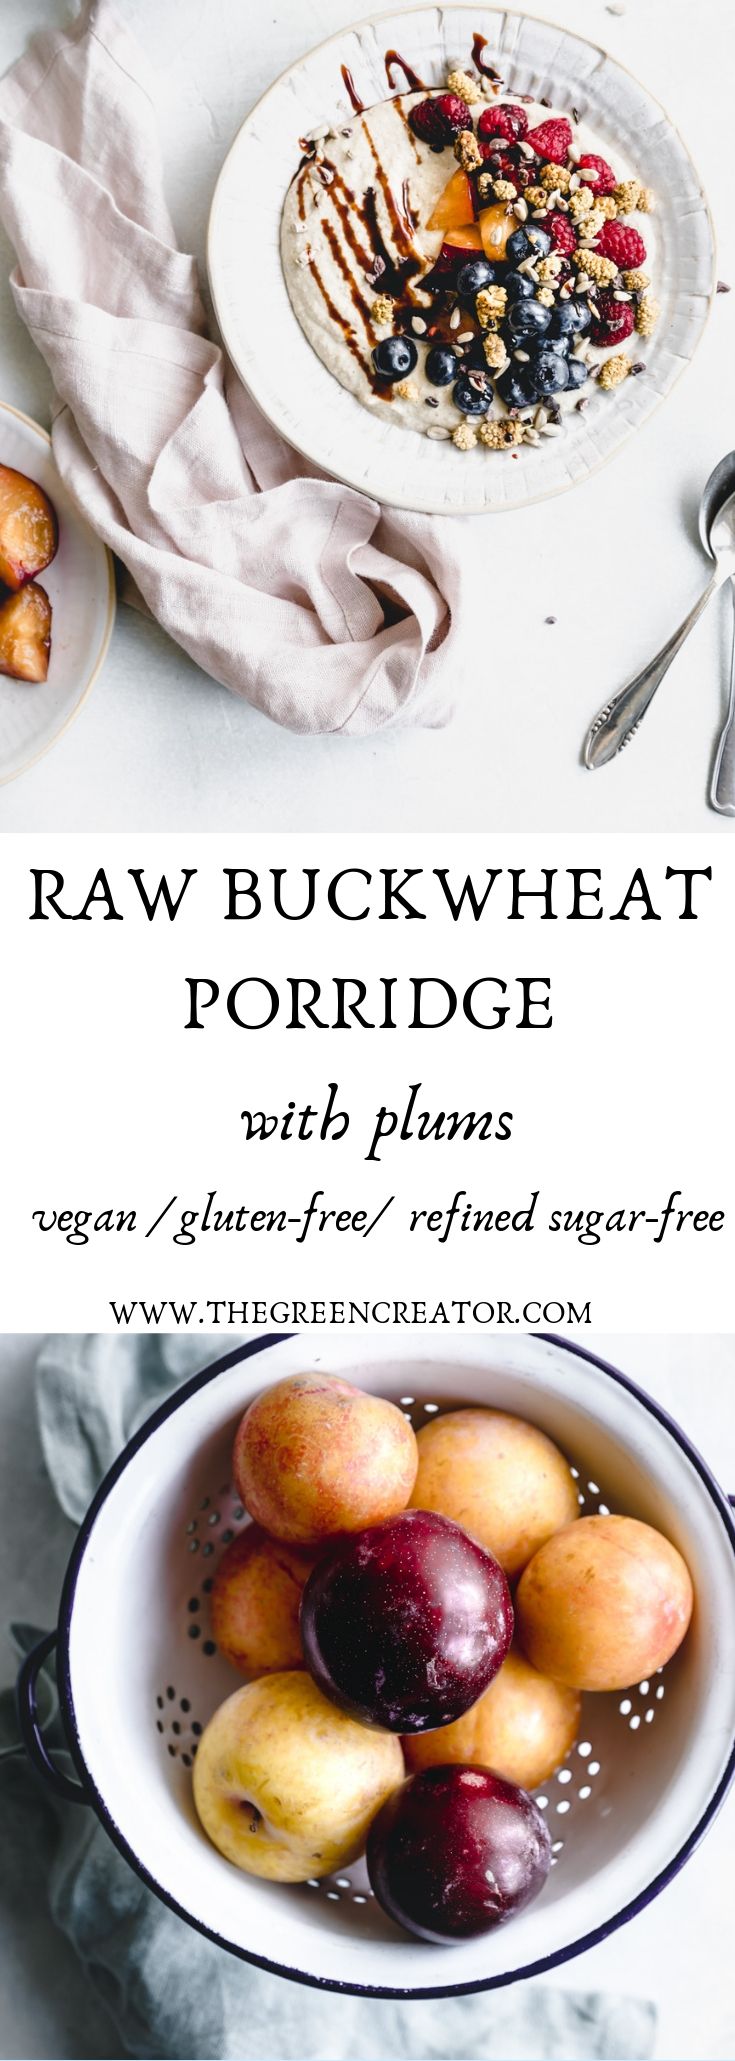 Raw Buckwheat Porridge with Plums